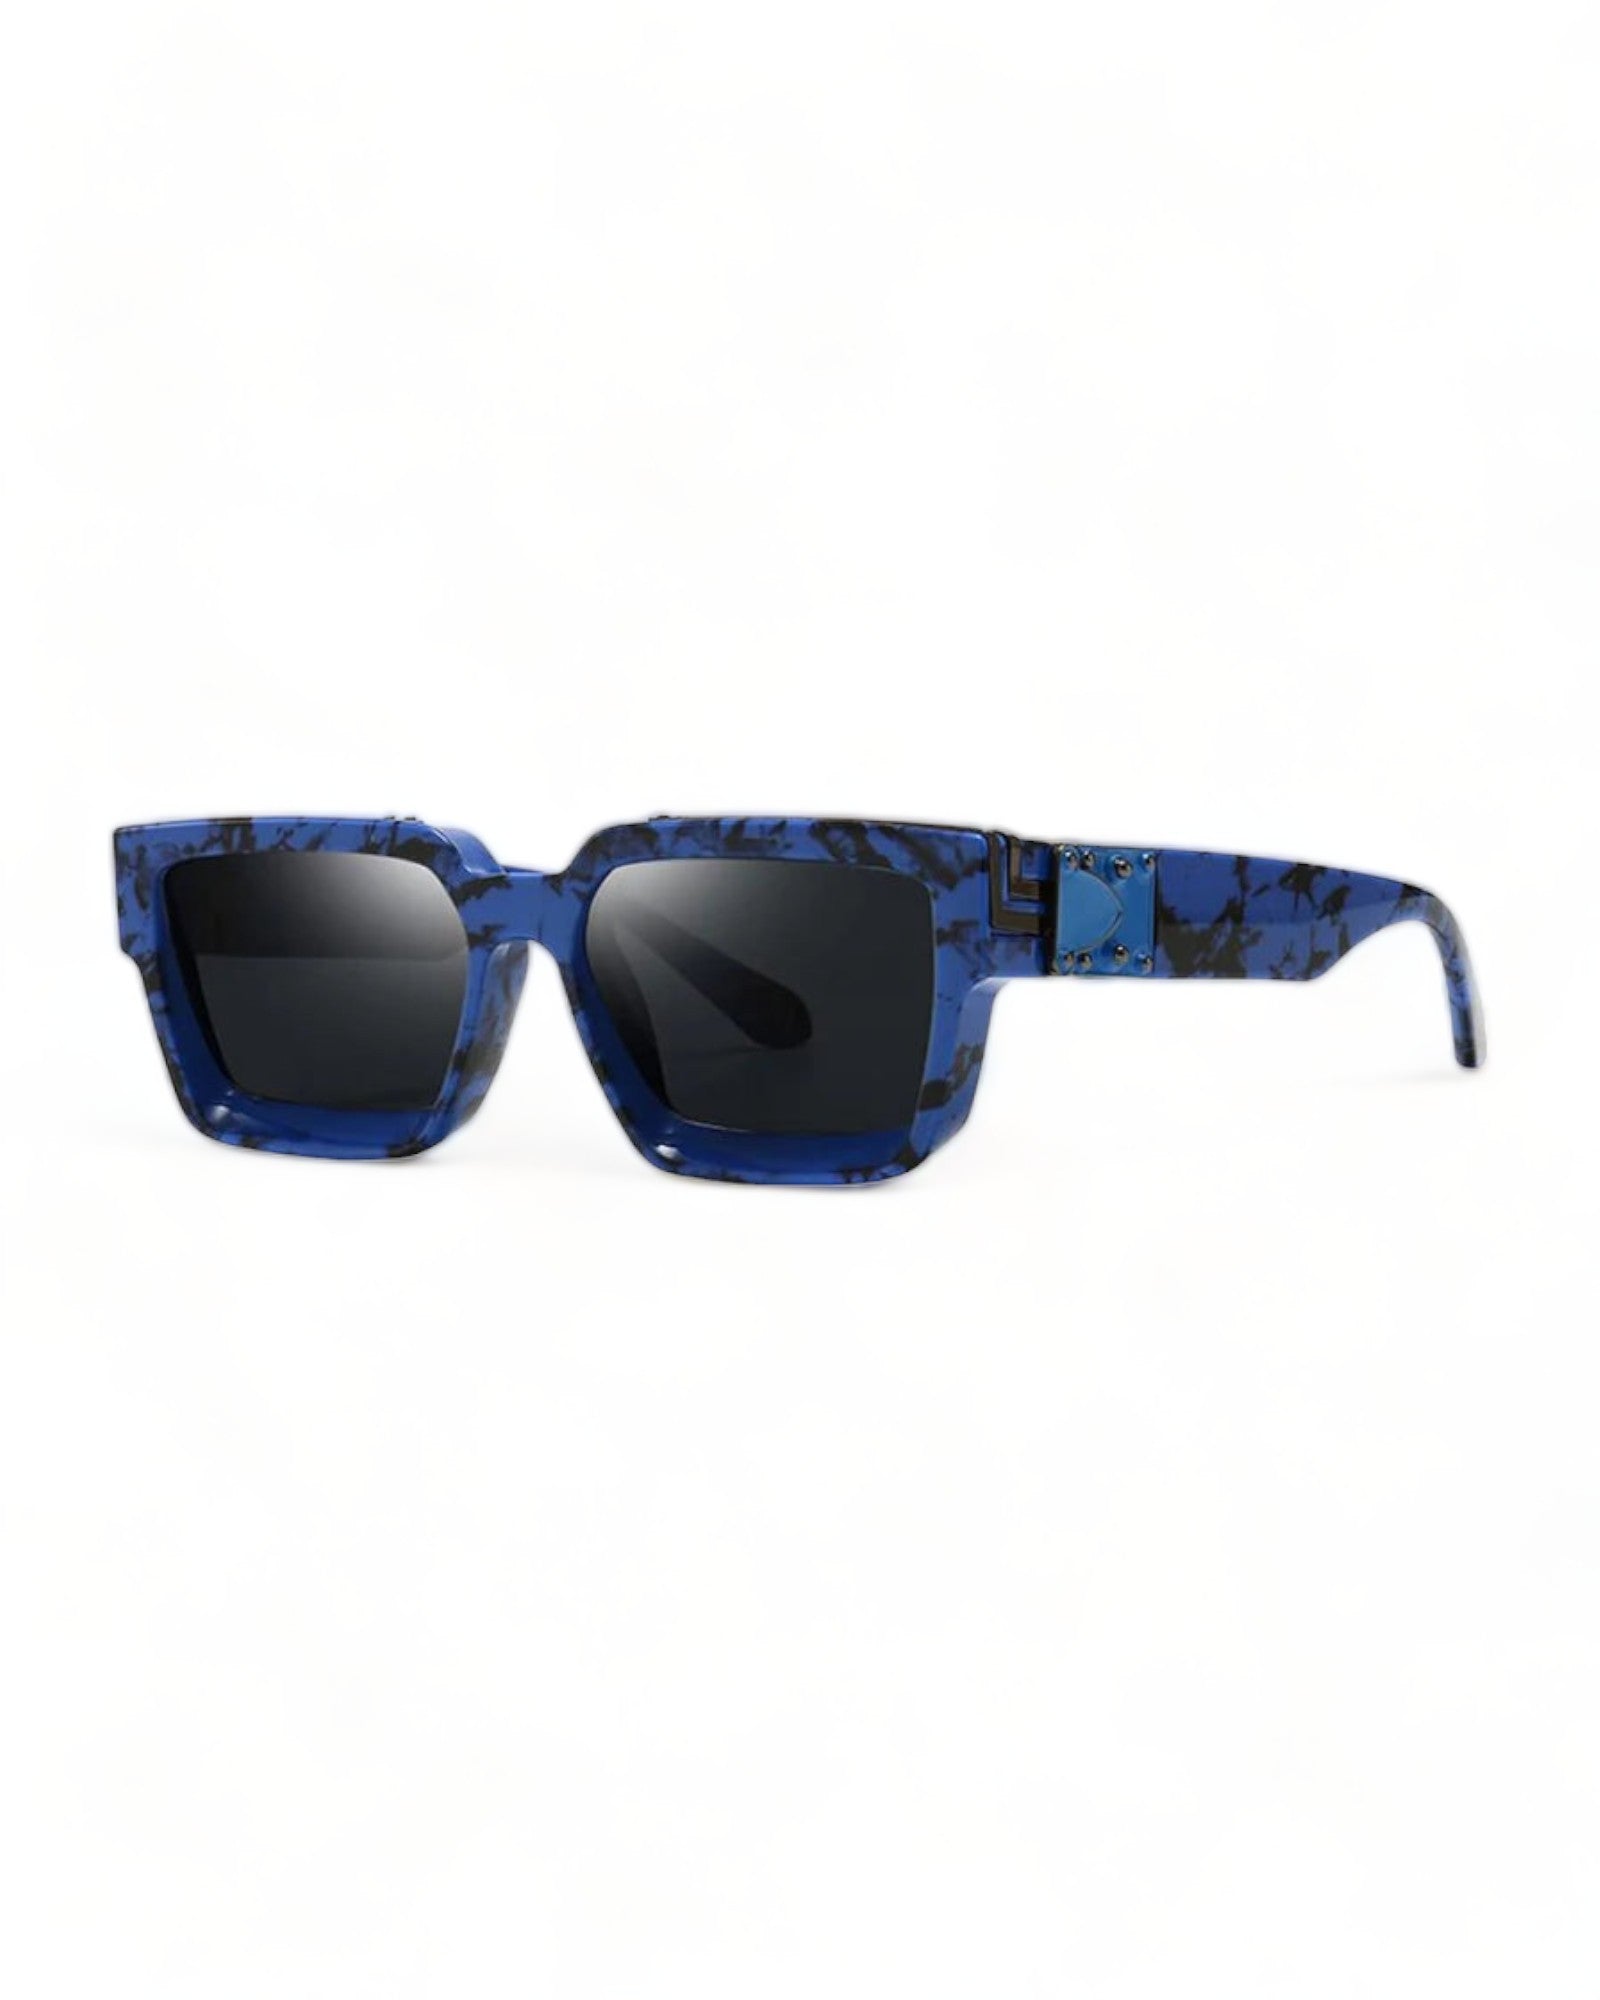 square sunglasses blue frame black lens Festival Fashion